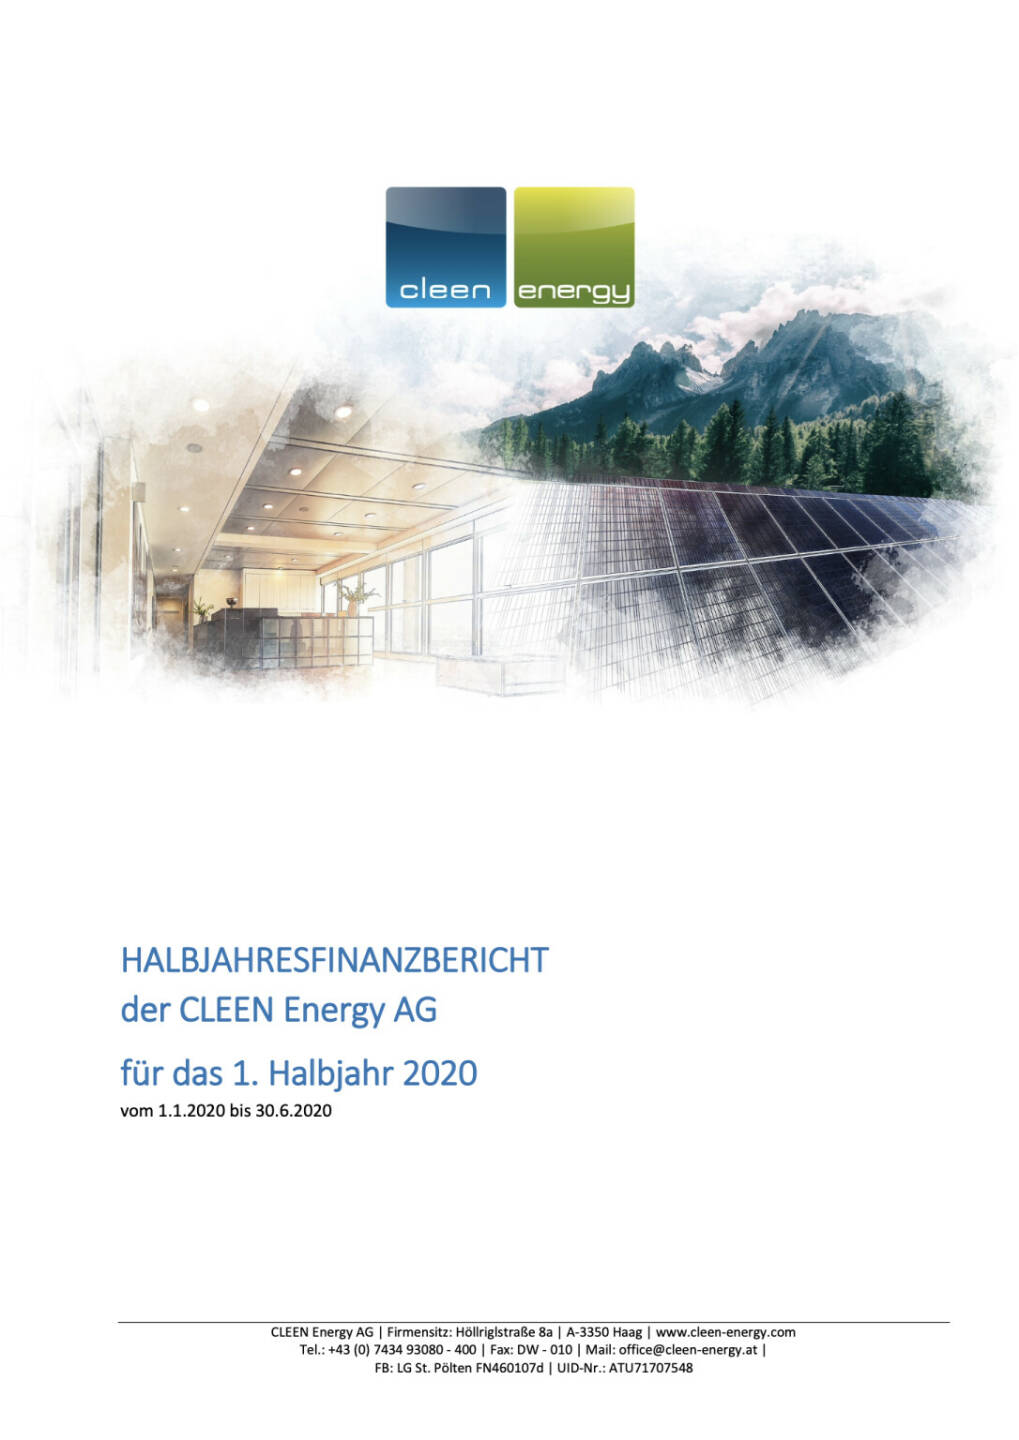 Cleen Energy HJ-Finanzbericht 2020 - https://boerse-social.com/companyreports/2021/214494/cleen_energy_hj-finanzbericht_2020